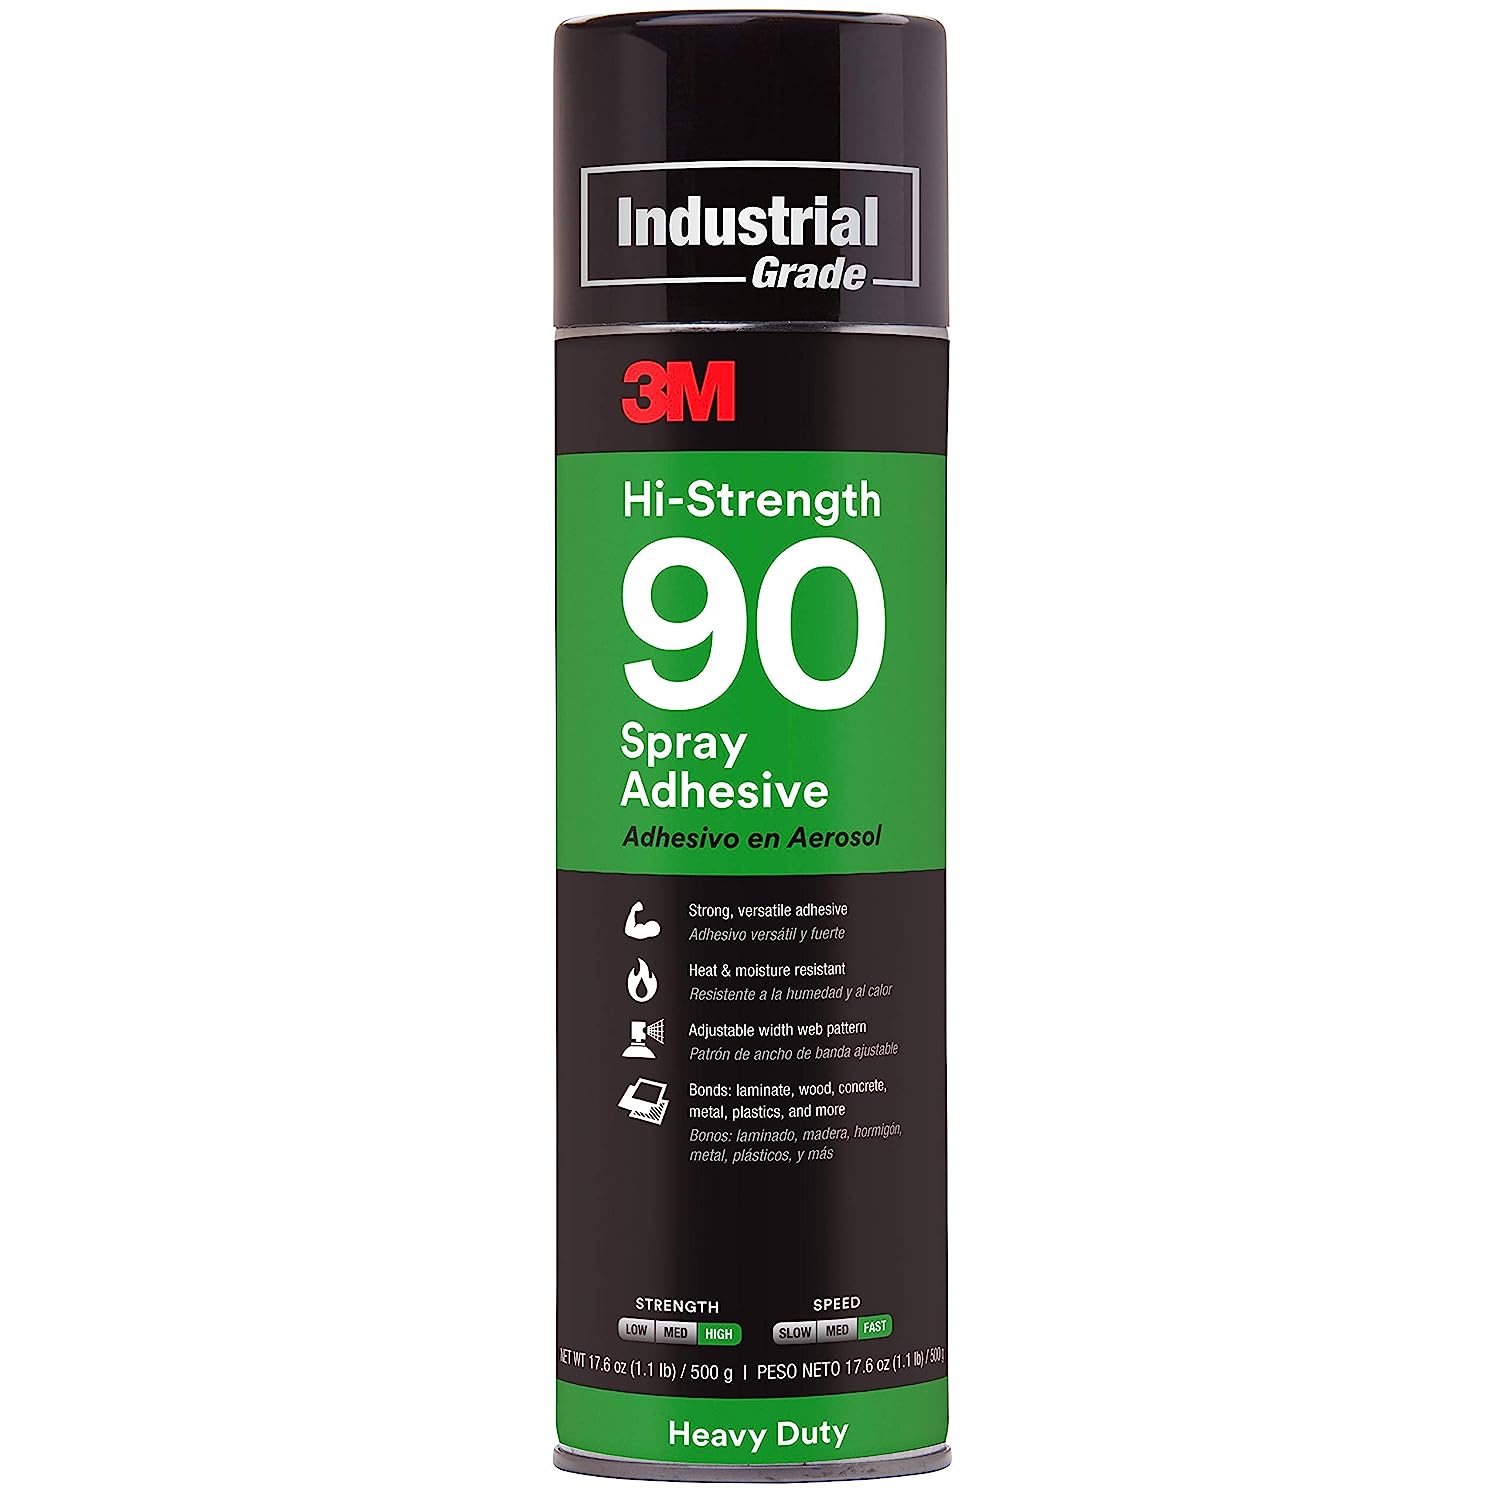 3M Hi-Strength 90 Spray Adhesive, Permanent, Bonds [...]